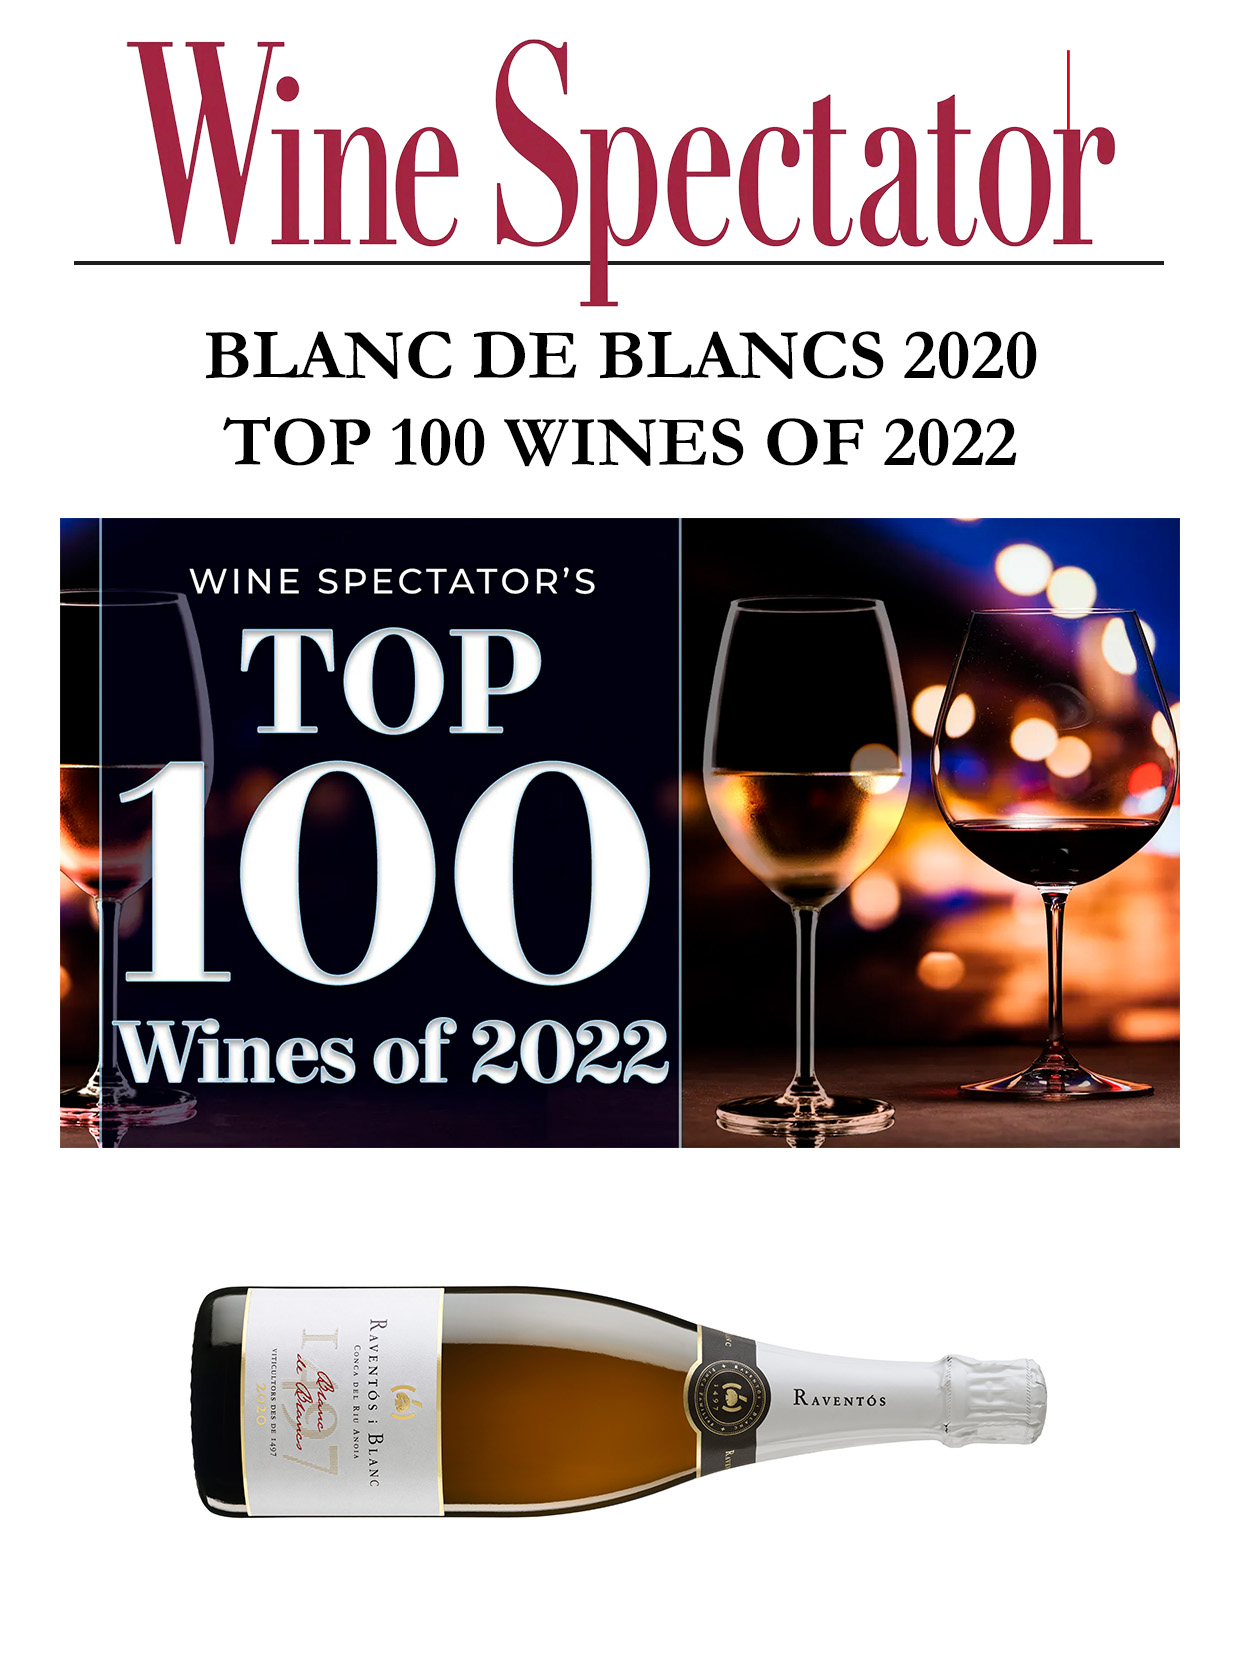 RAVENTÓS I BLANC - Winegrowers since 1497